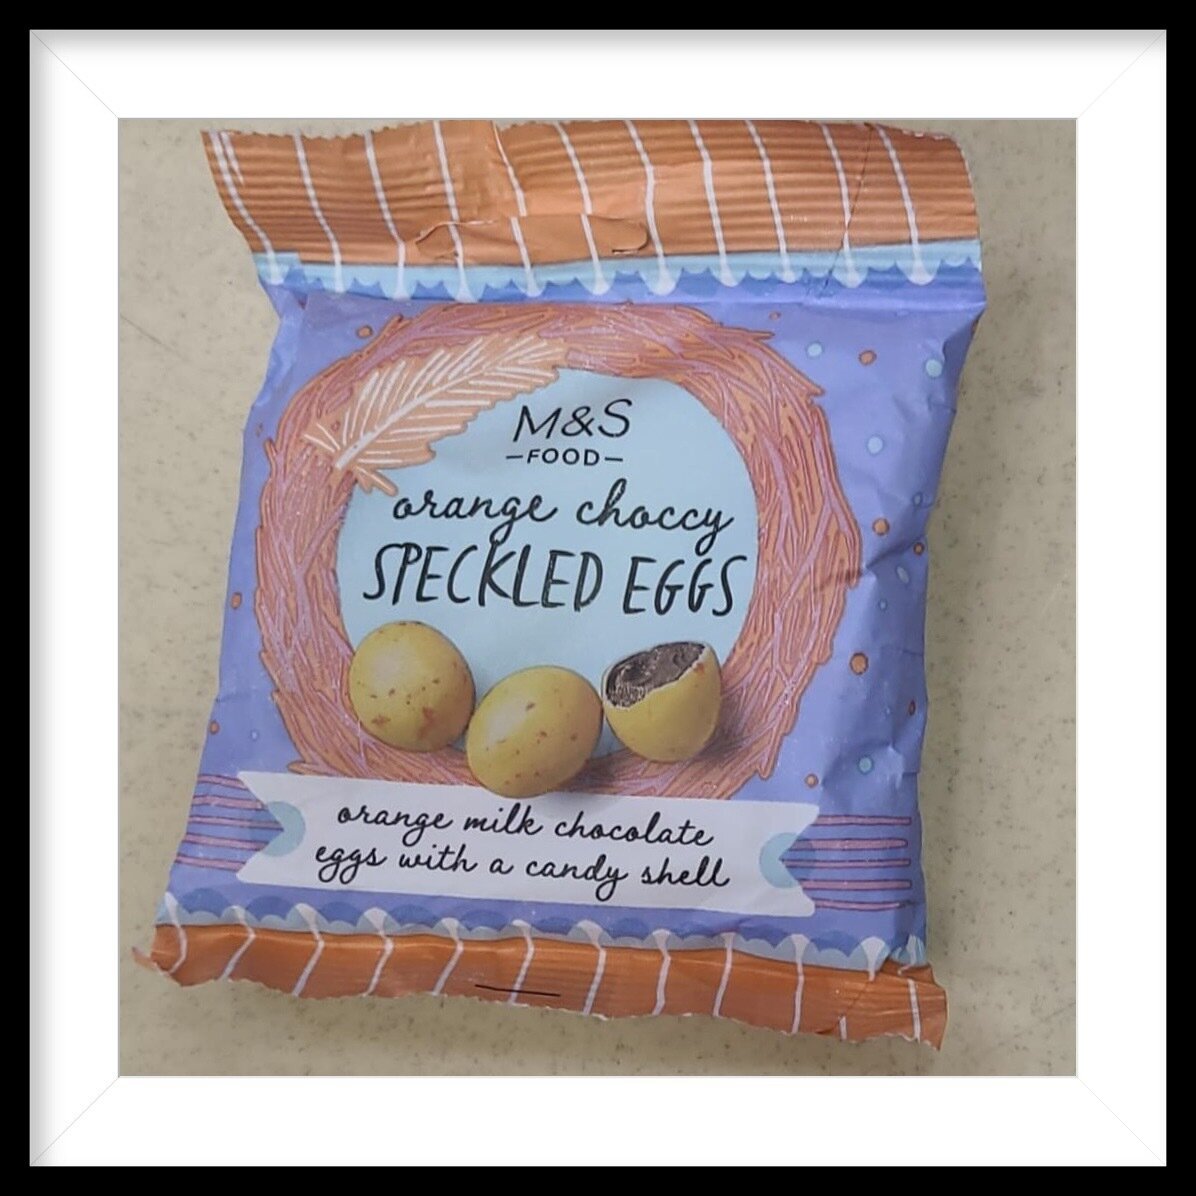 M&S Orange Choccy Speckled Eggs